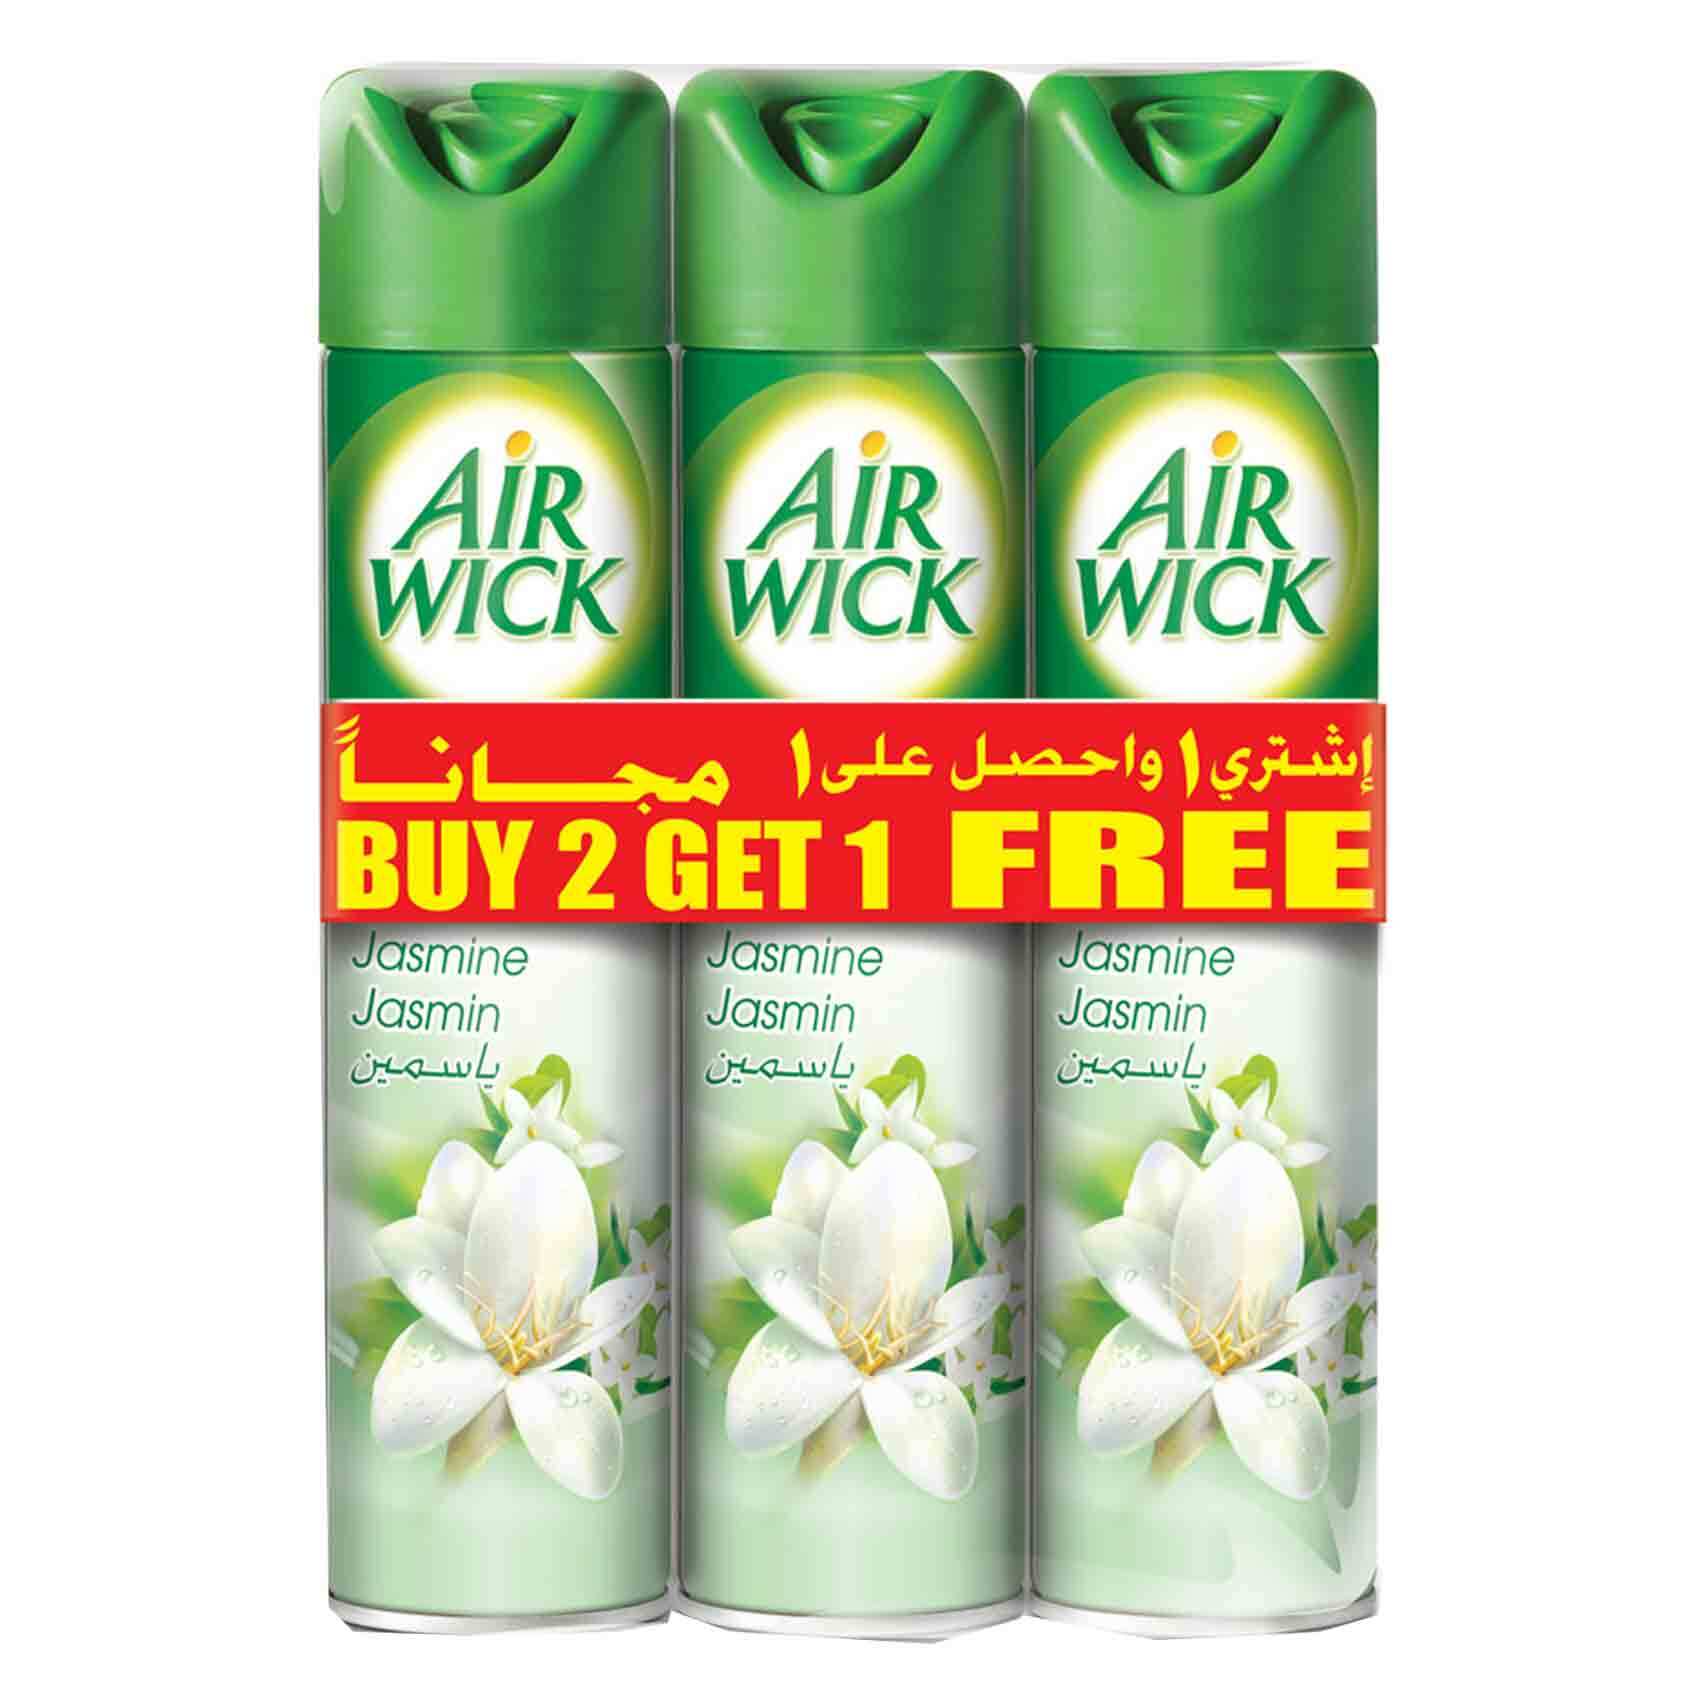 Buy Air Wick White Lilac & Magnolia Freshmatic Auto Spray Refill, 250ml  Online in Jordan